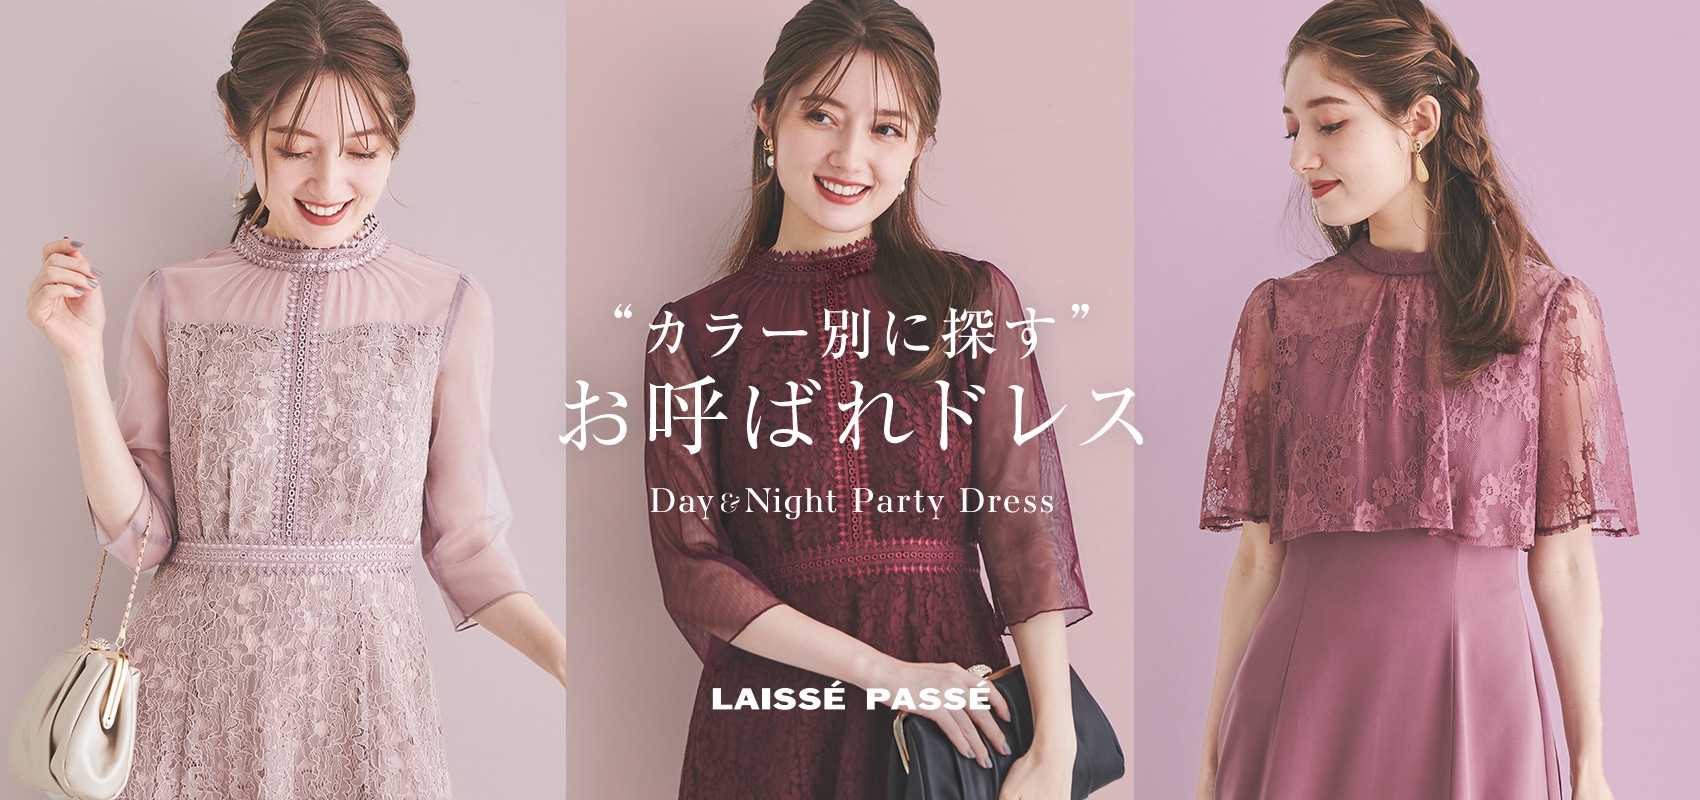 LAISSE PASSE カラー別に探す お呼ばれドレス -Day&Night Party Dress-